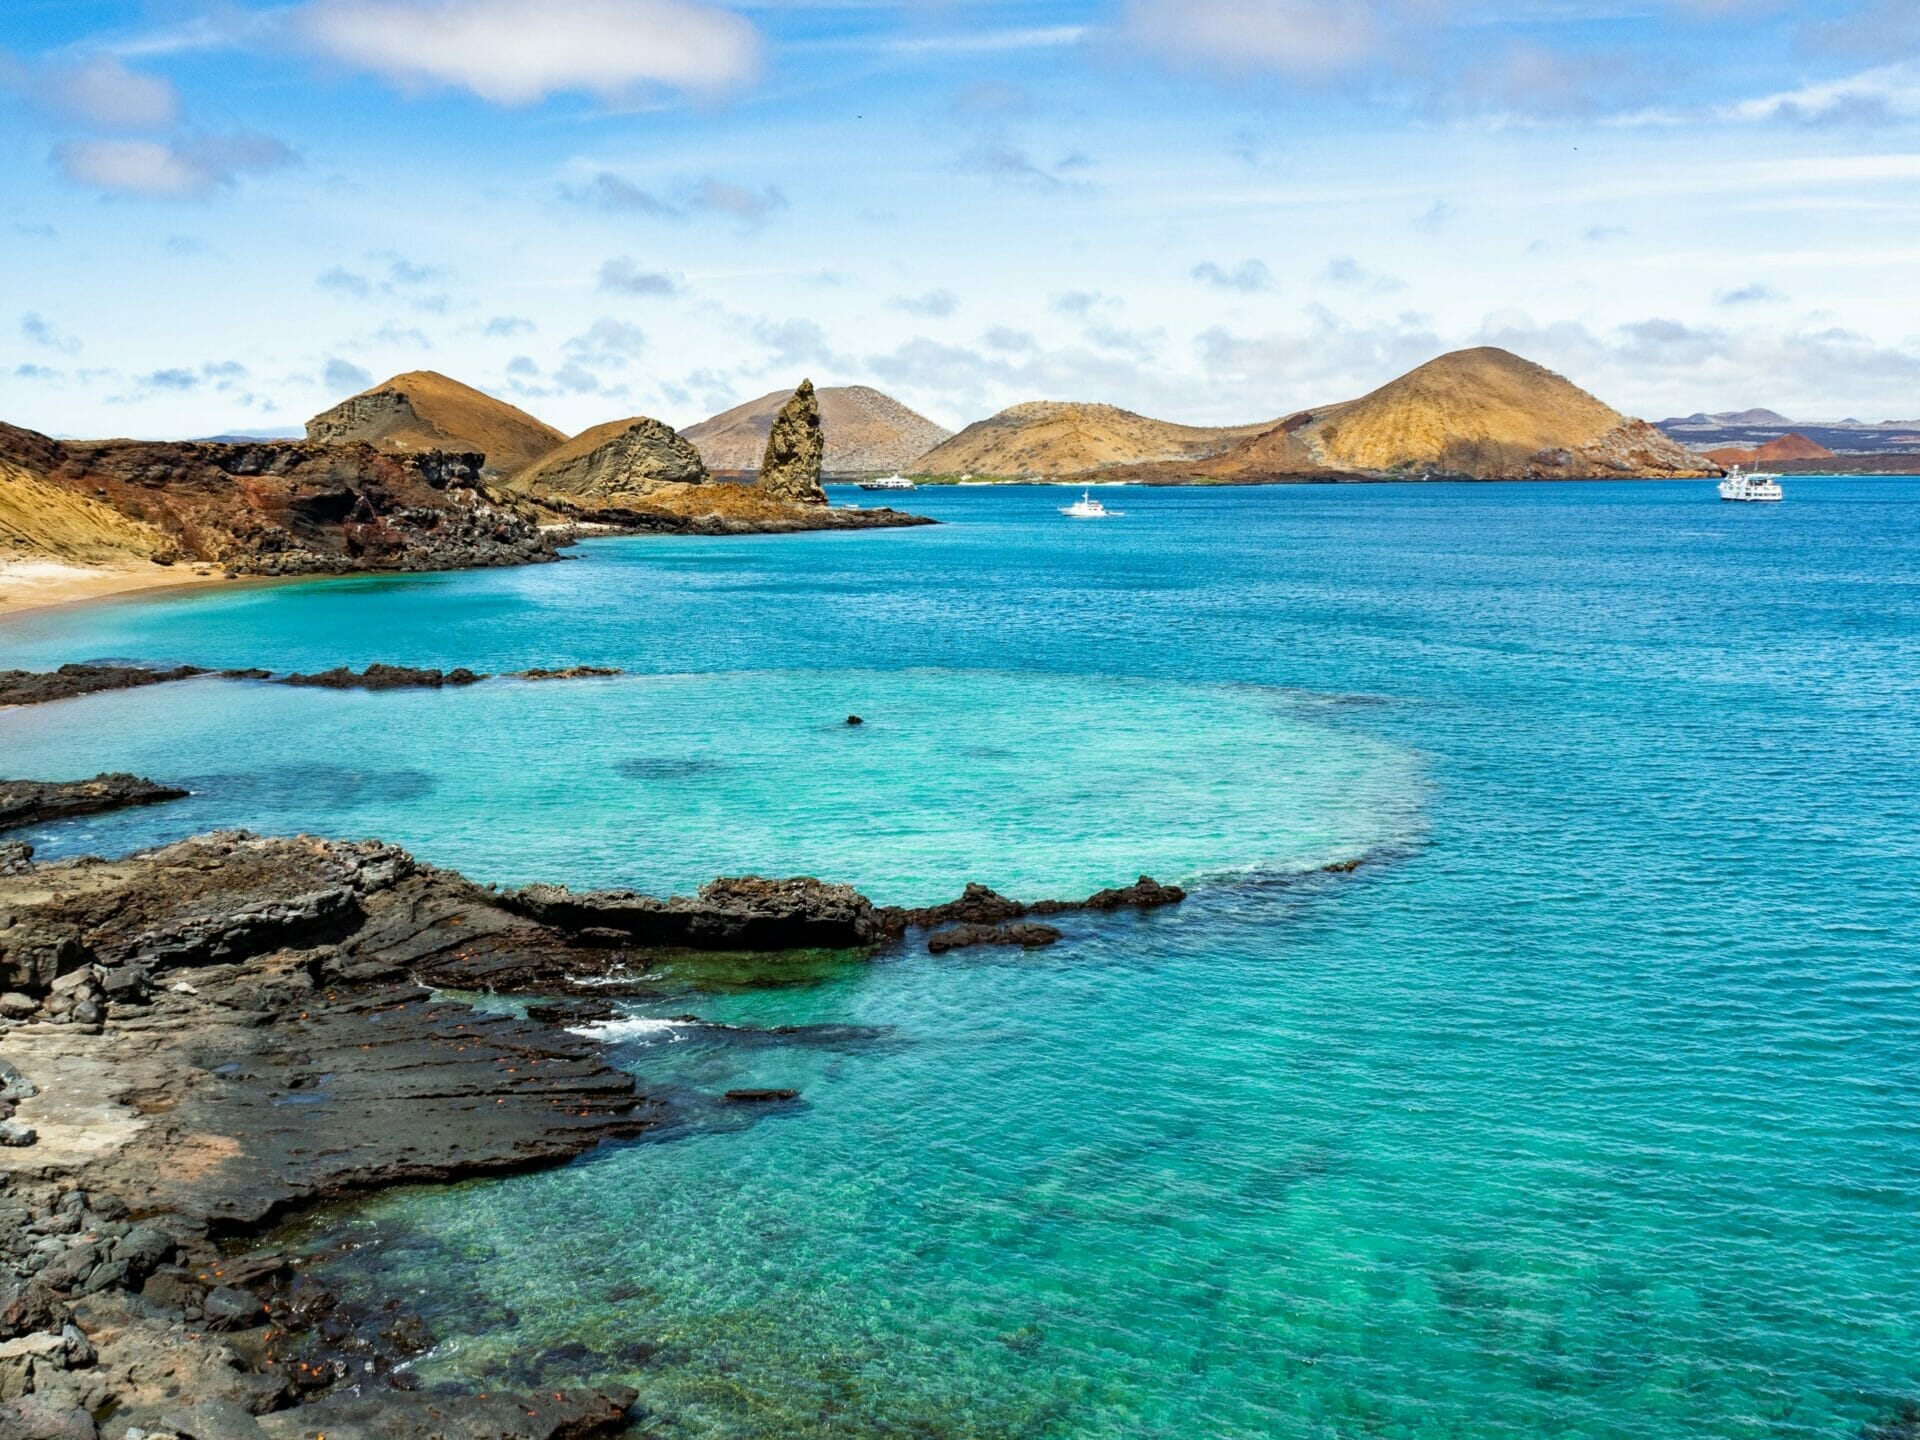 Bartolome island galapagos islands travel